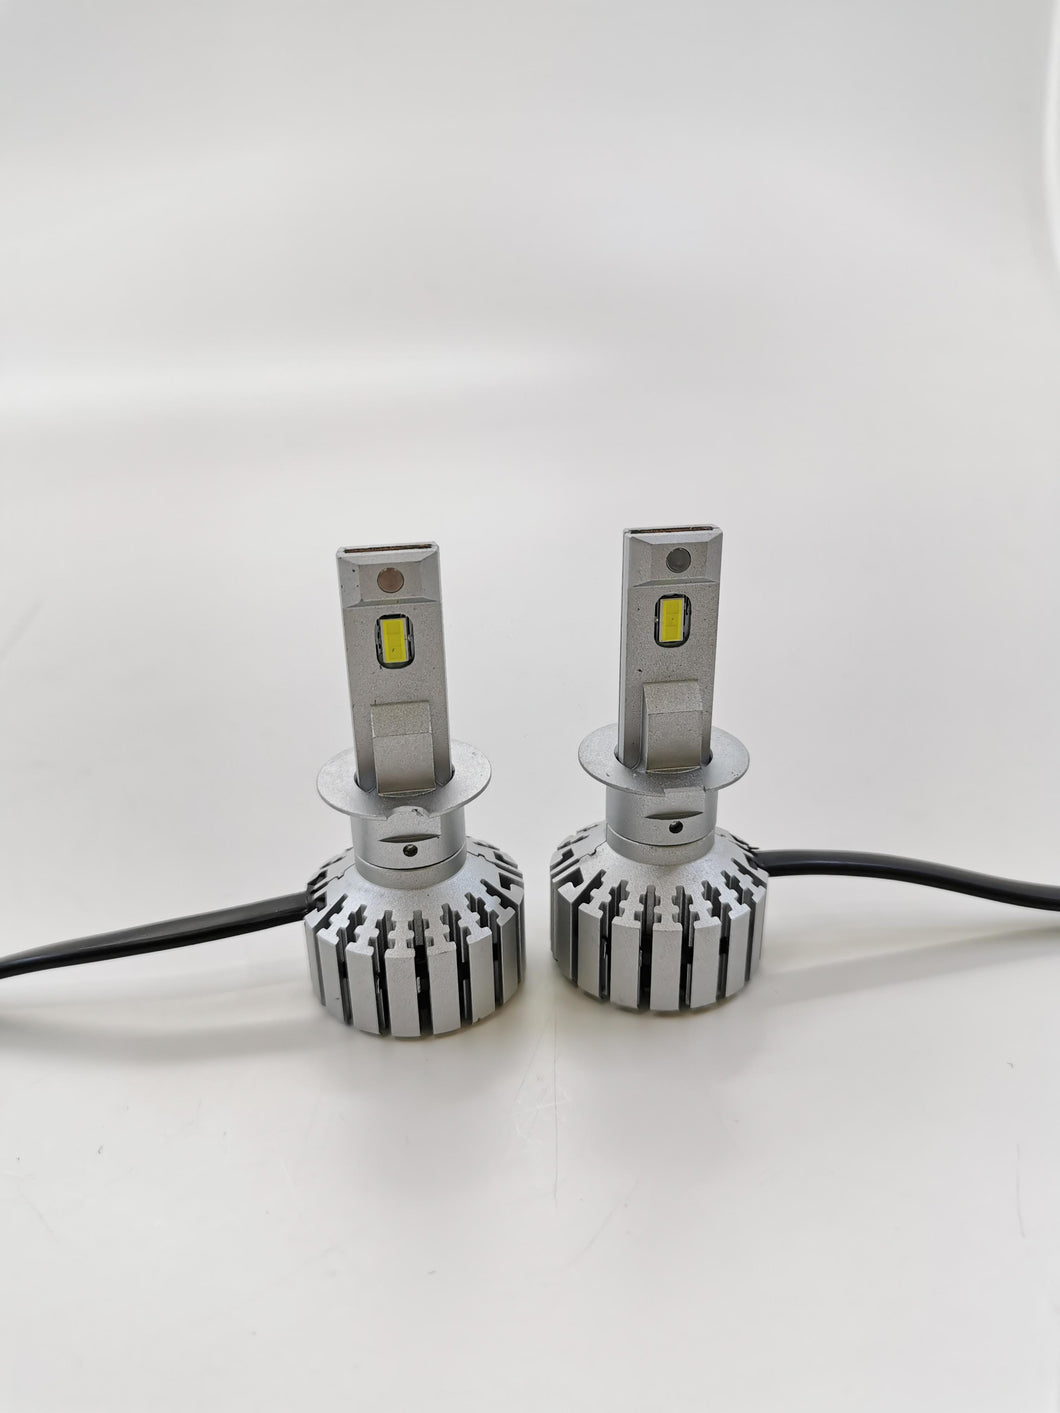 Premium Compact COB Headlight & Foglight Bulbs